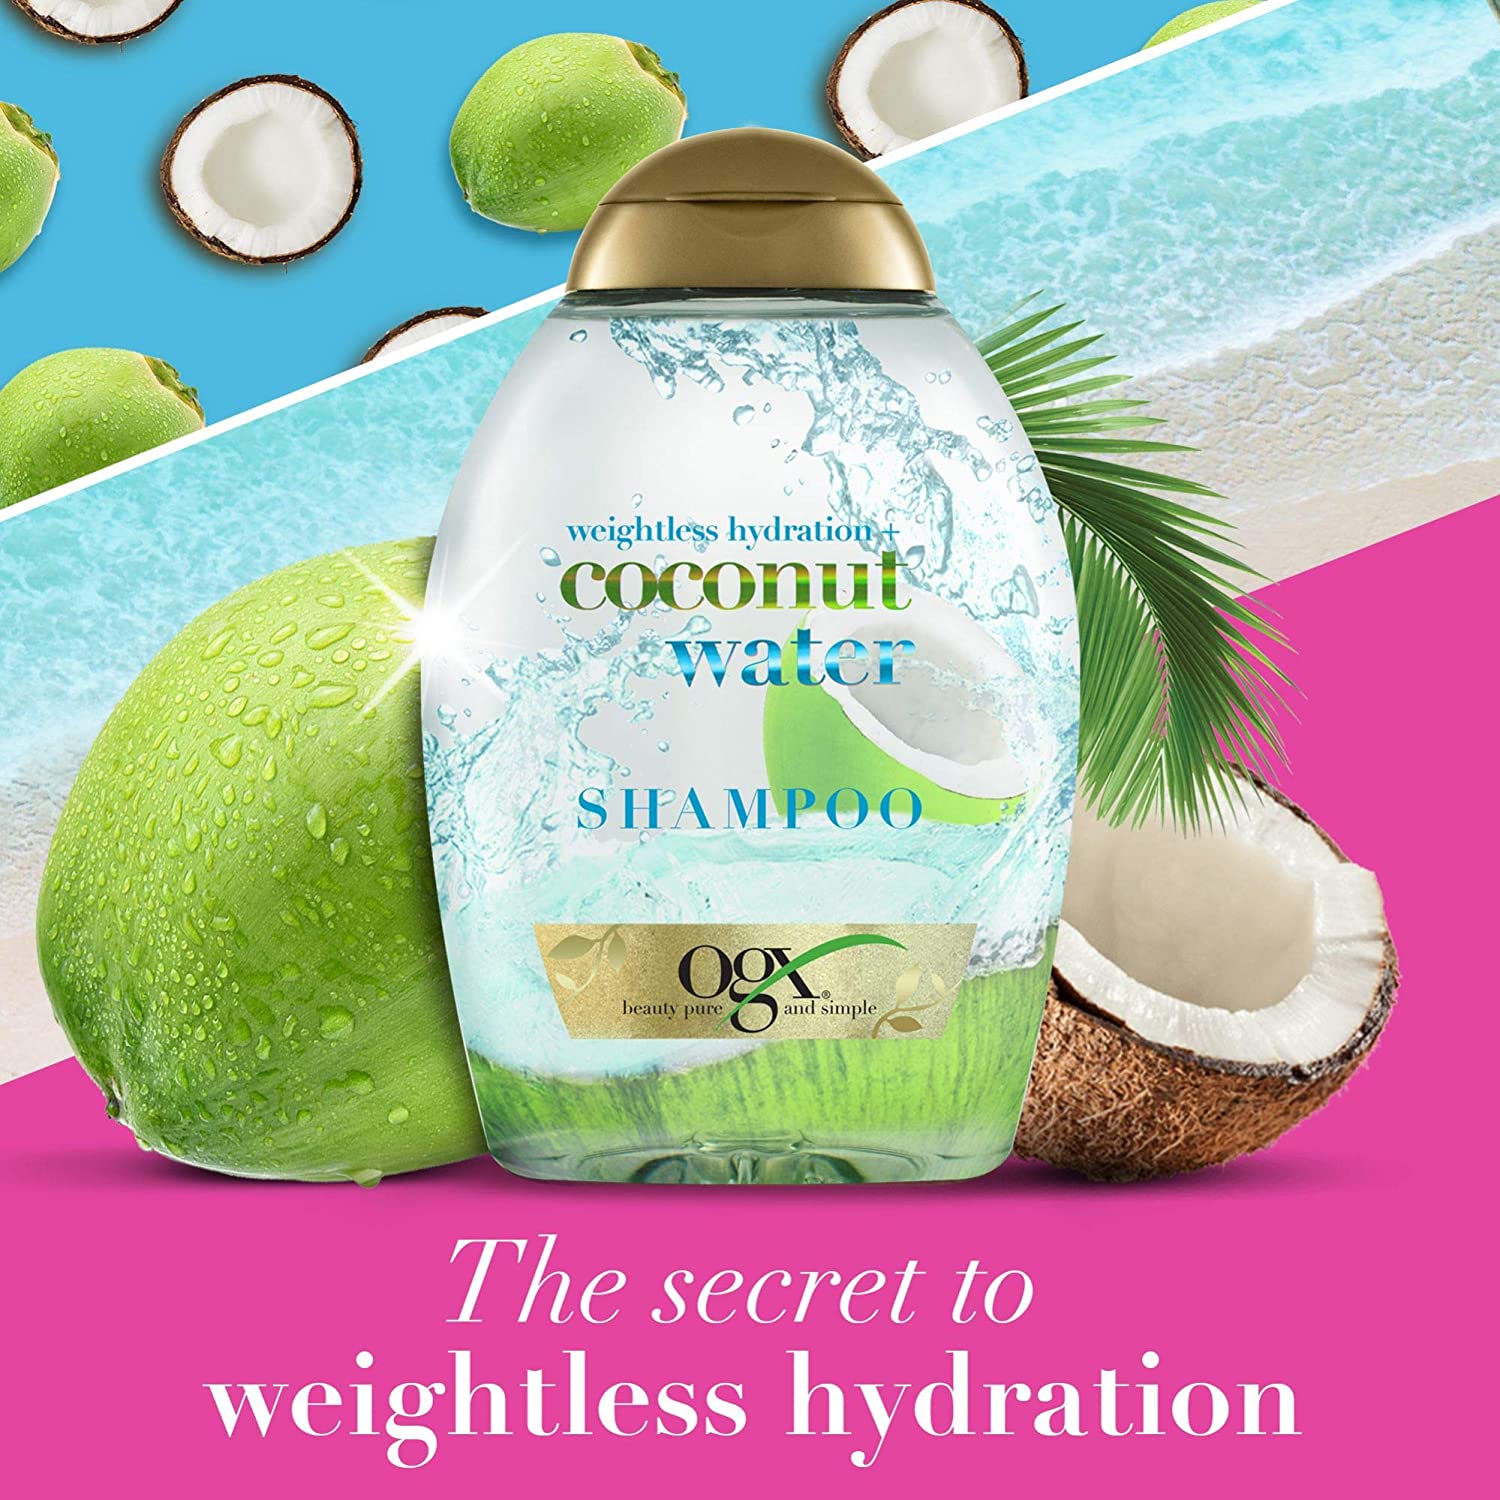 Coconut Water Shampoo 385Ml